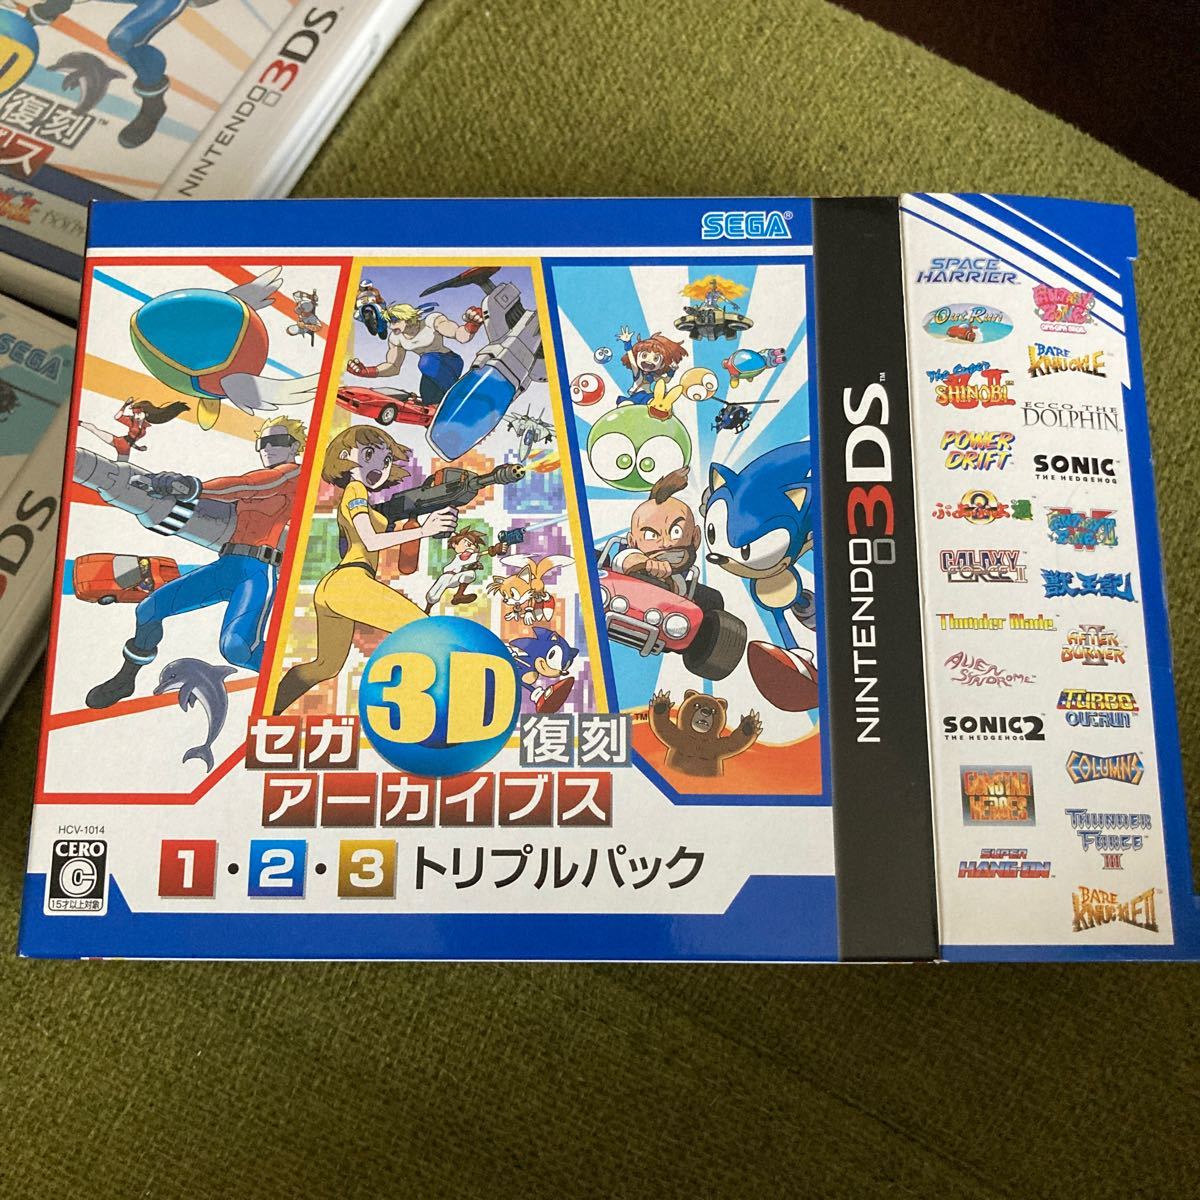 3DS】 セガ3D 復刻アーカイブス1・2・3 トリプルパック - brandsynariourdu.com